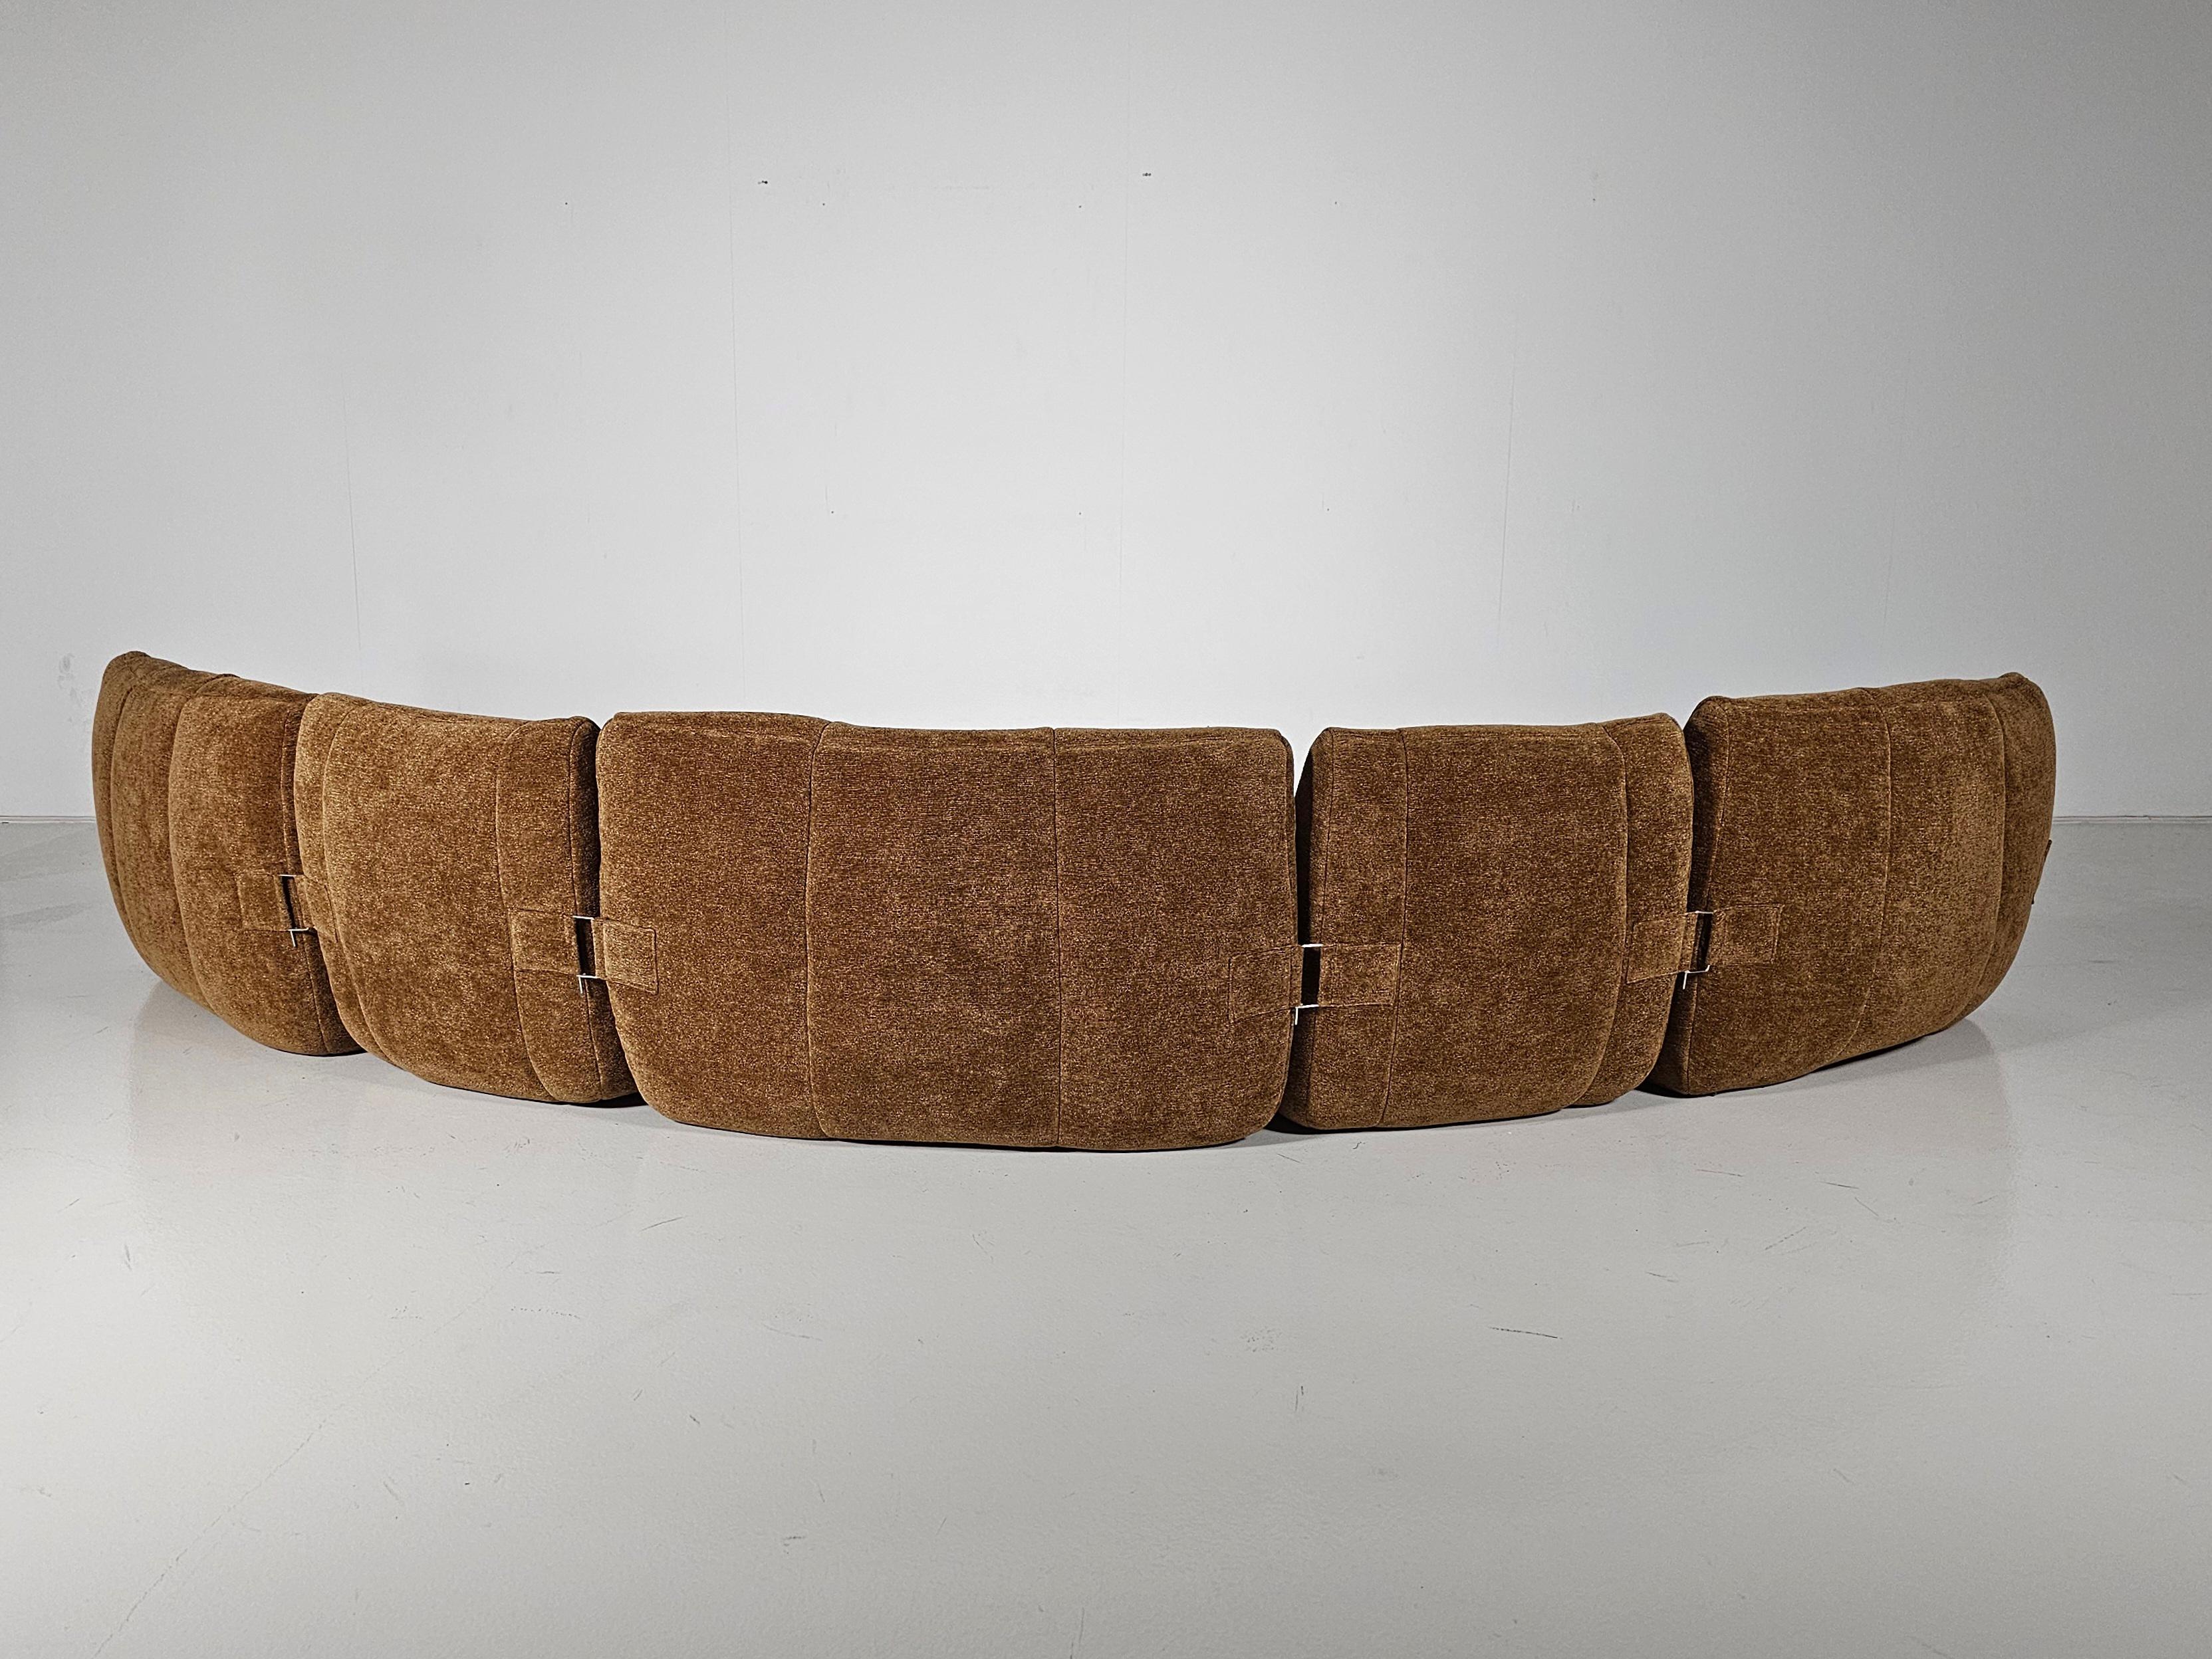 Brown Modular 'Gilda' sofa by Michel Ducaroy for Ligne Roset, France For Sale 1